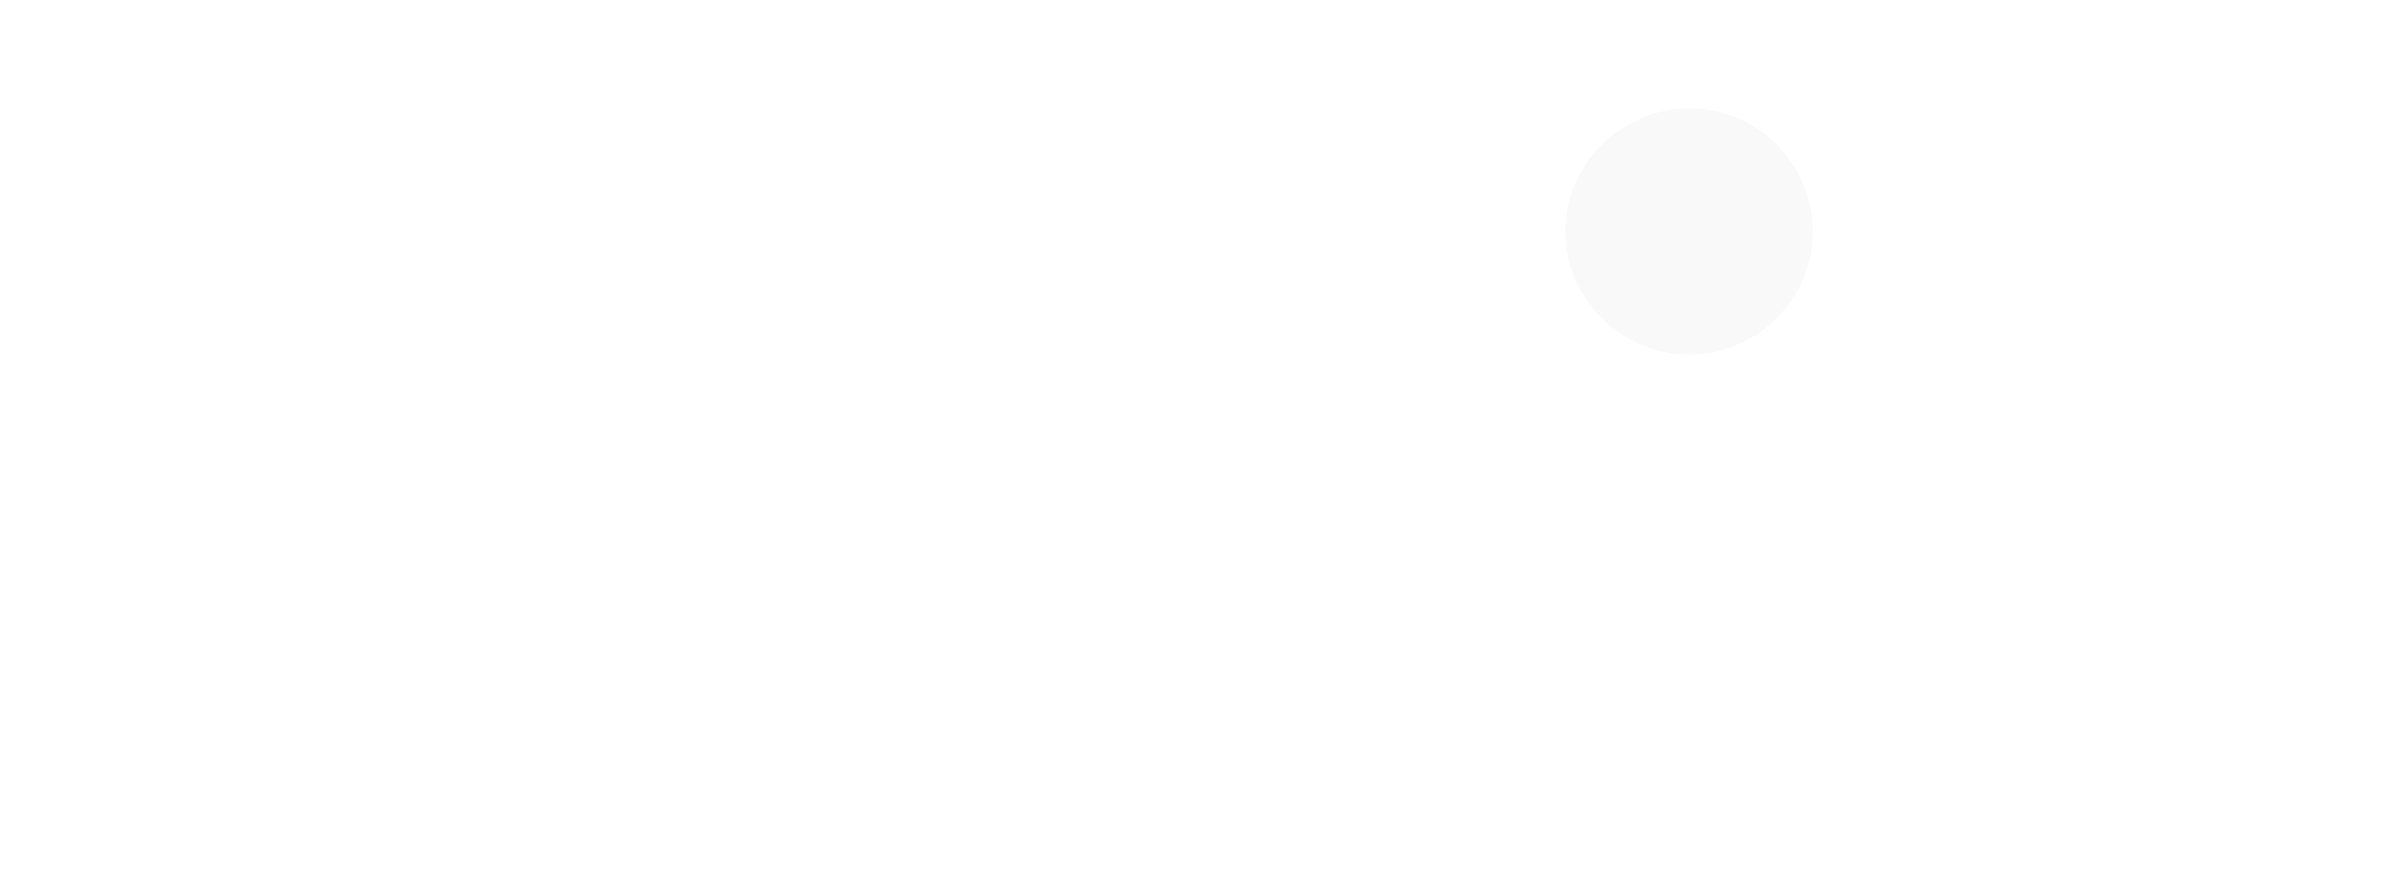 Logo ExplorAgency